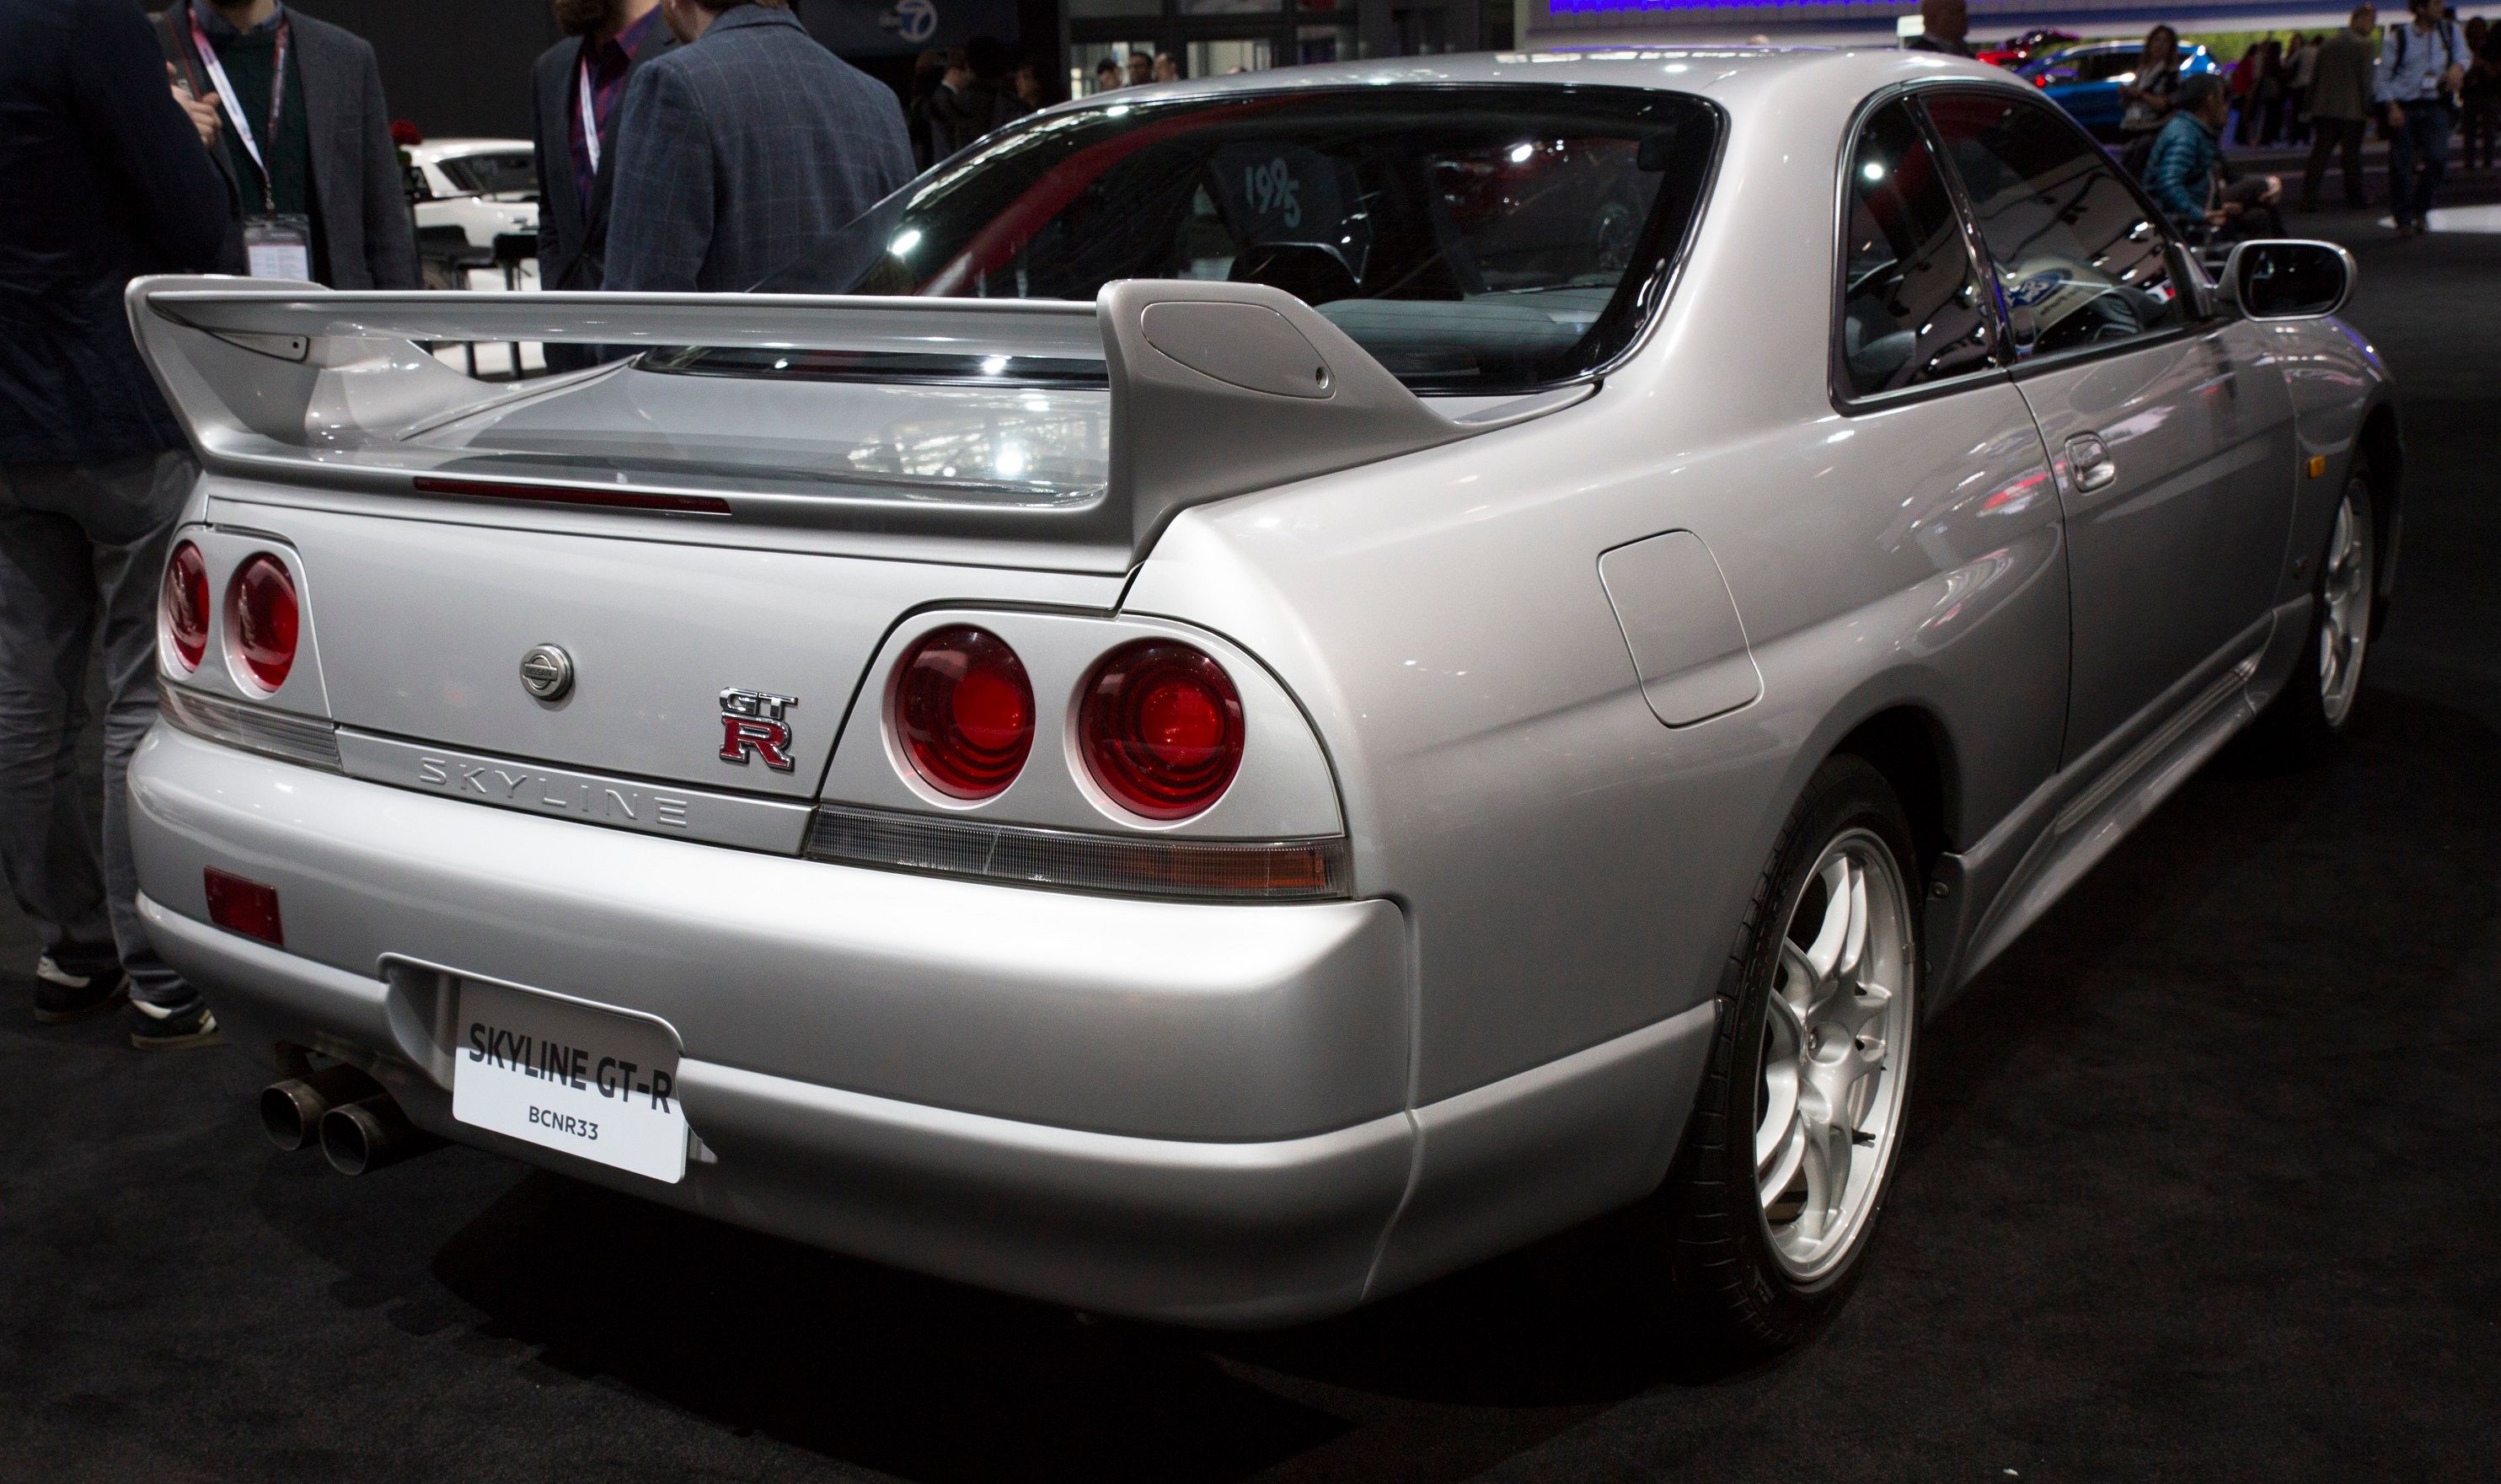 Silver Nissan Skyline GT-R, rear view